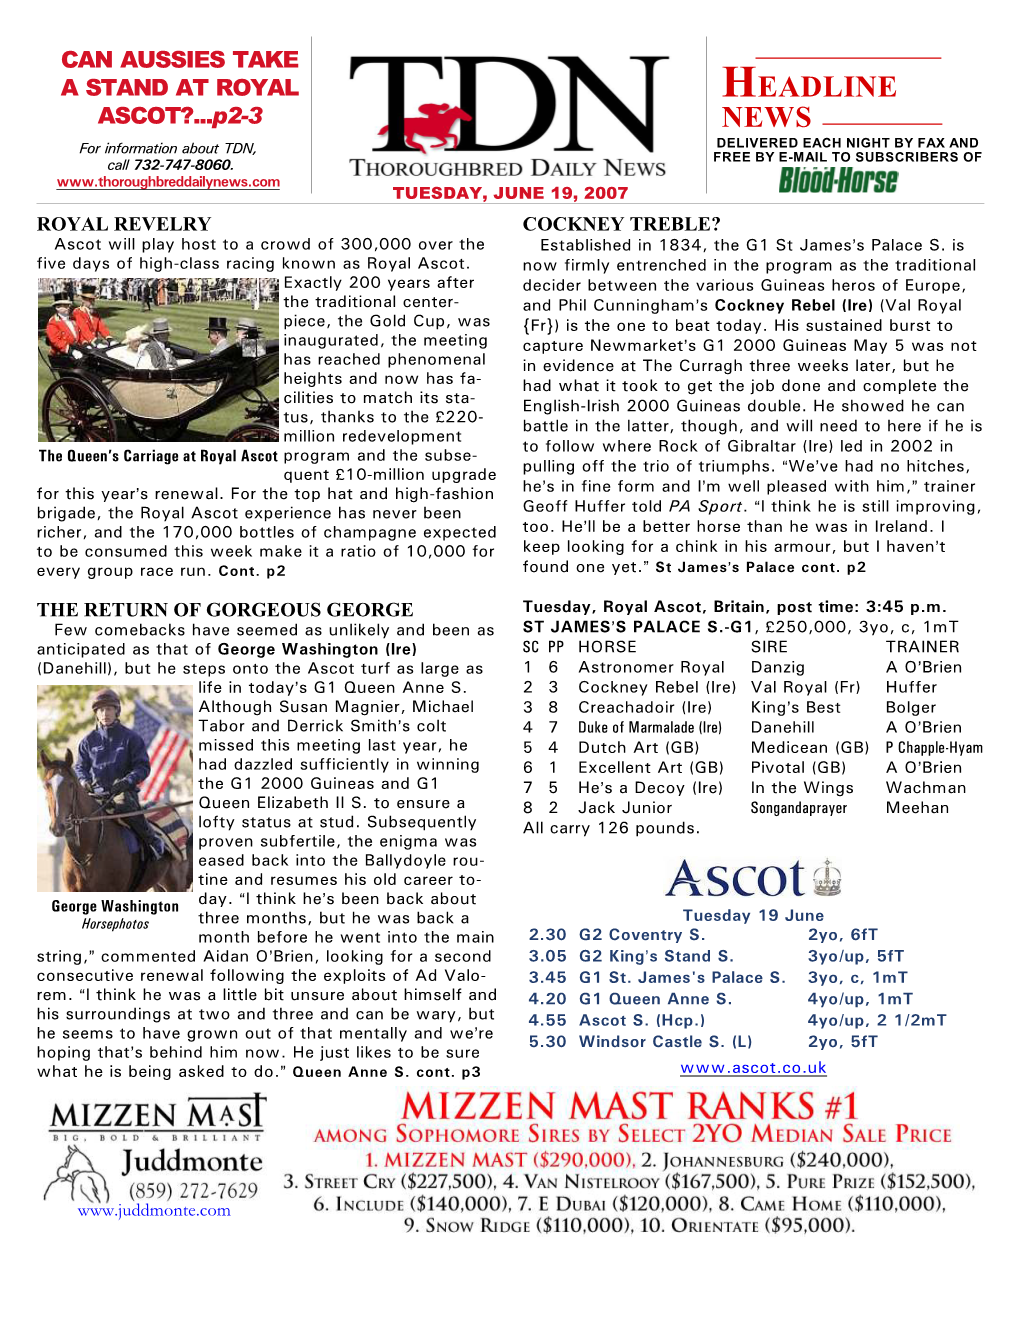 HEADLINE NEWS • 6/19/07 • PAGE 2 of 7